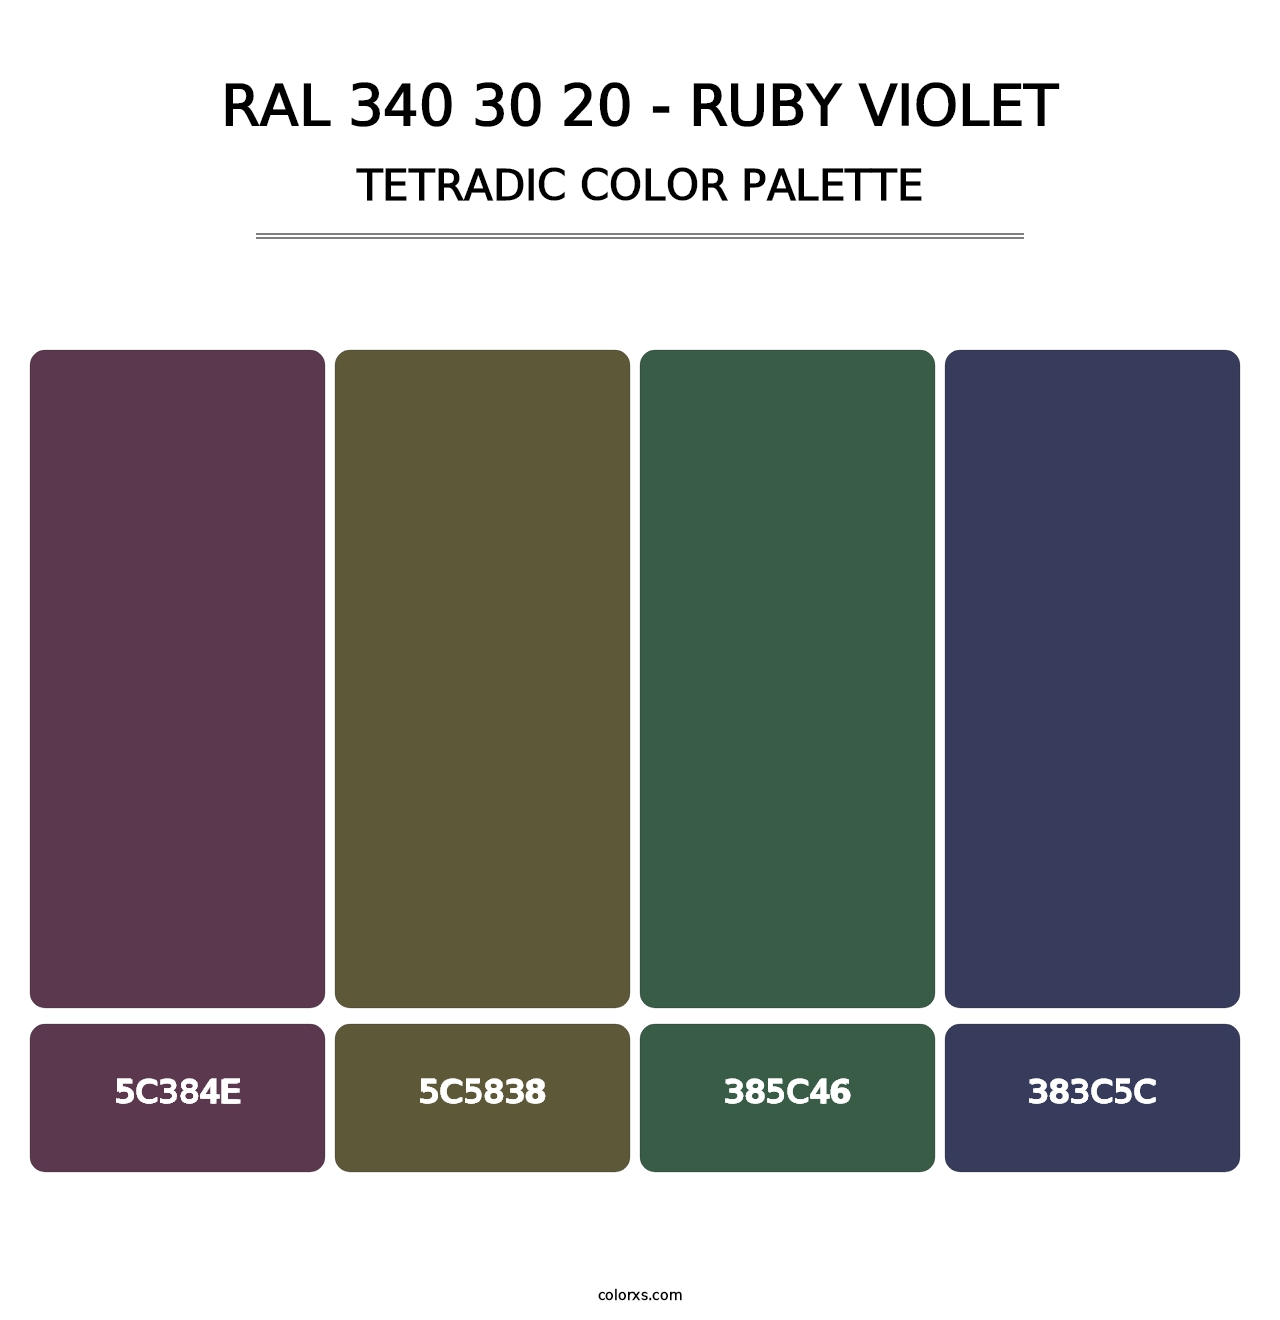 RAL 340 30 20 - Ruby Violet - Tetradic Color Palette